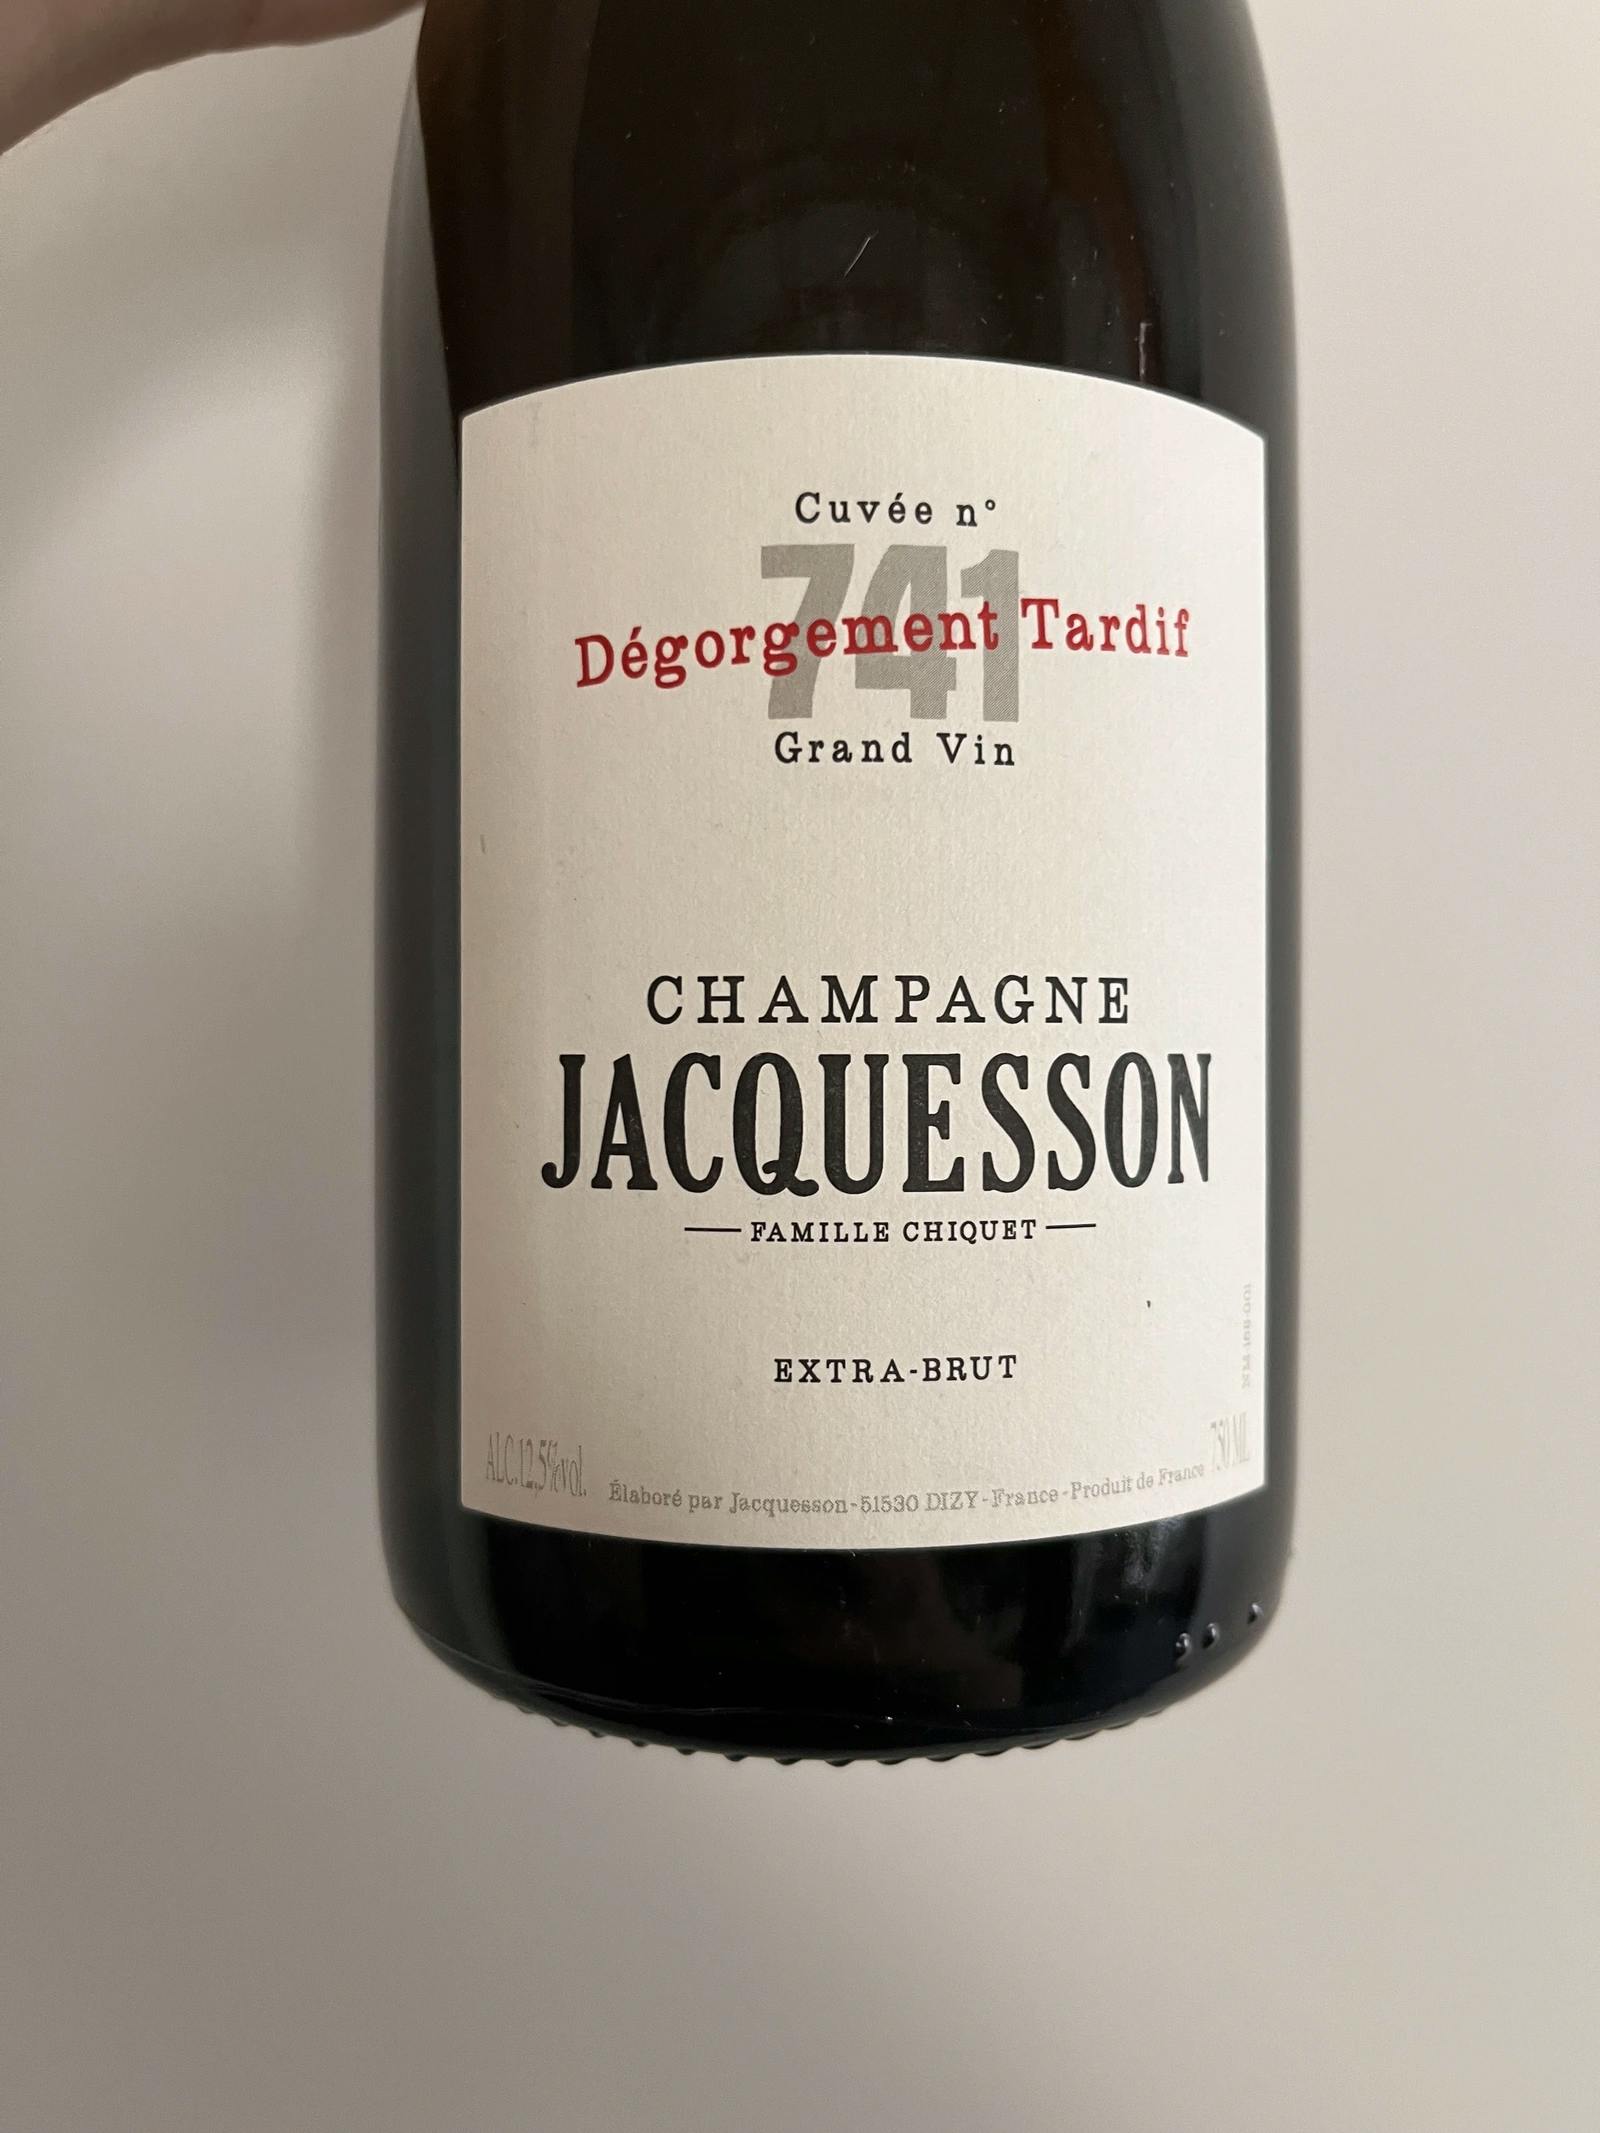 Jacquesson Cuvée 741 DT Grand Vin (2013) NV